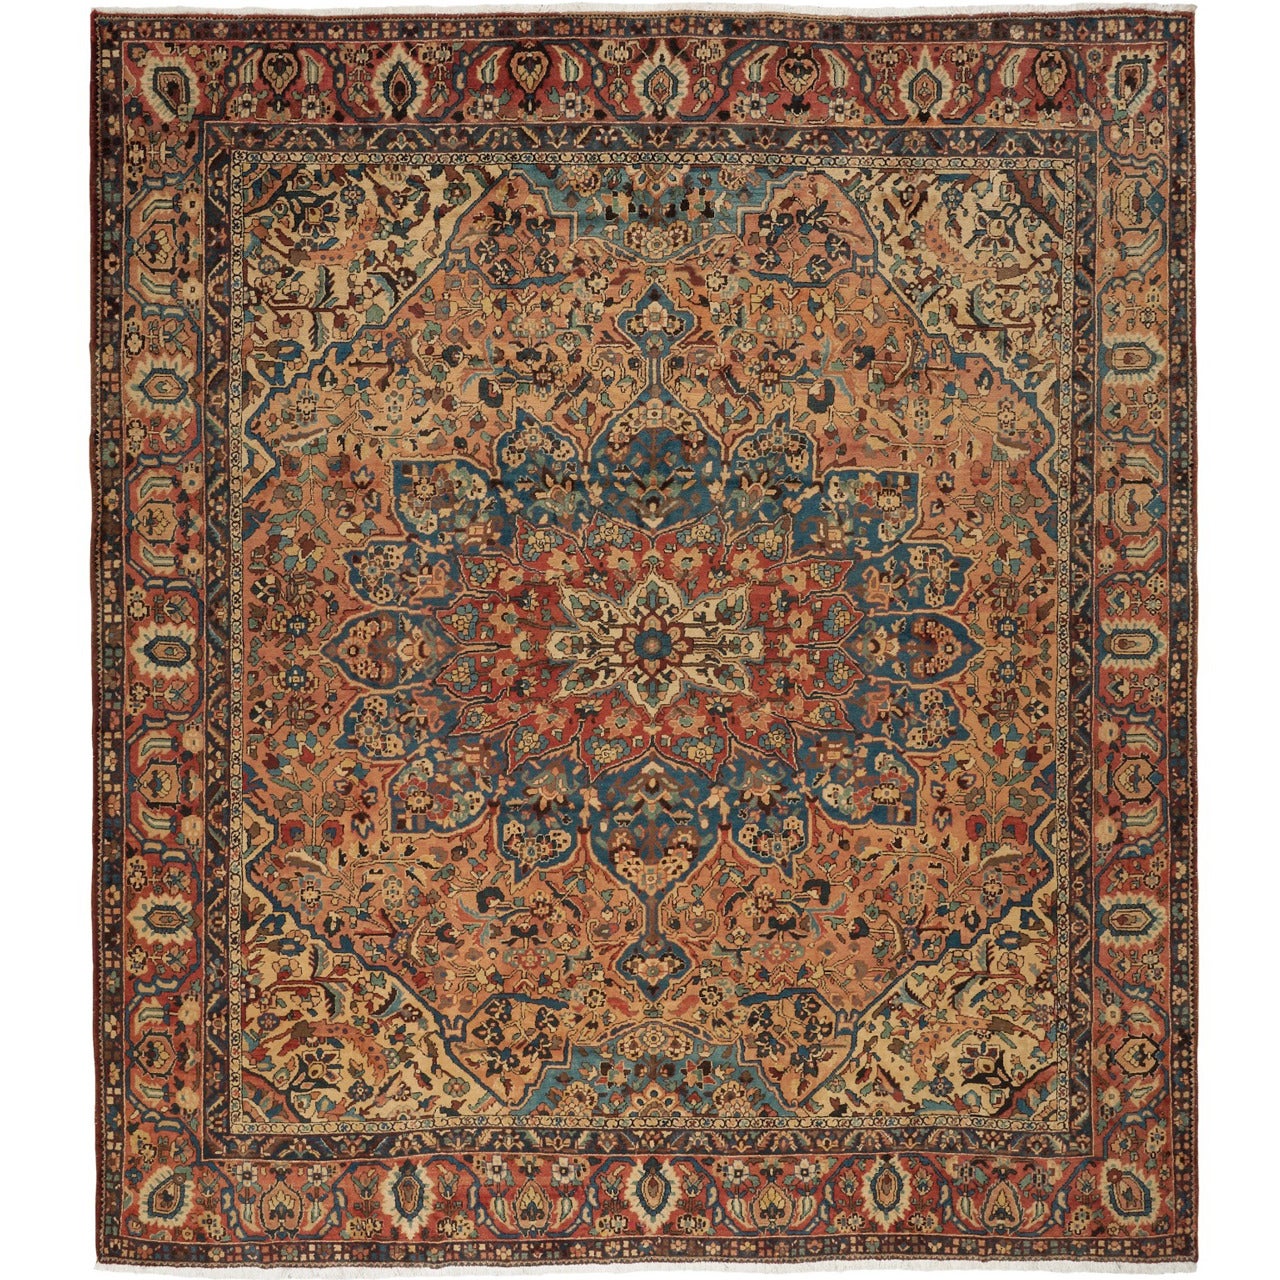 Oversize Antique Bakhtiari Carpet